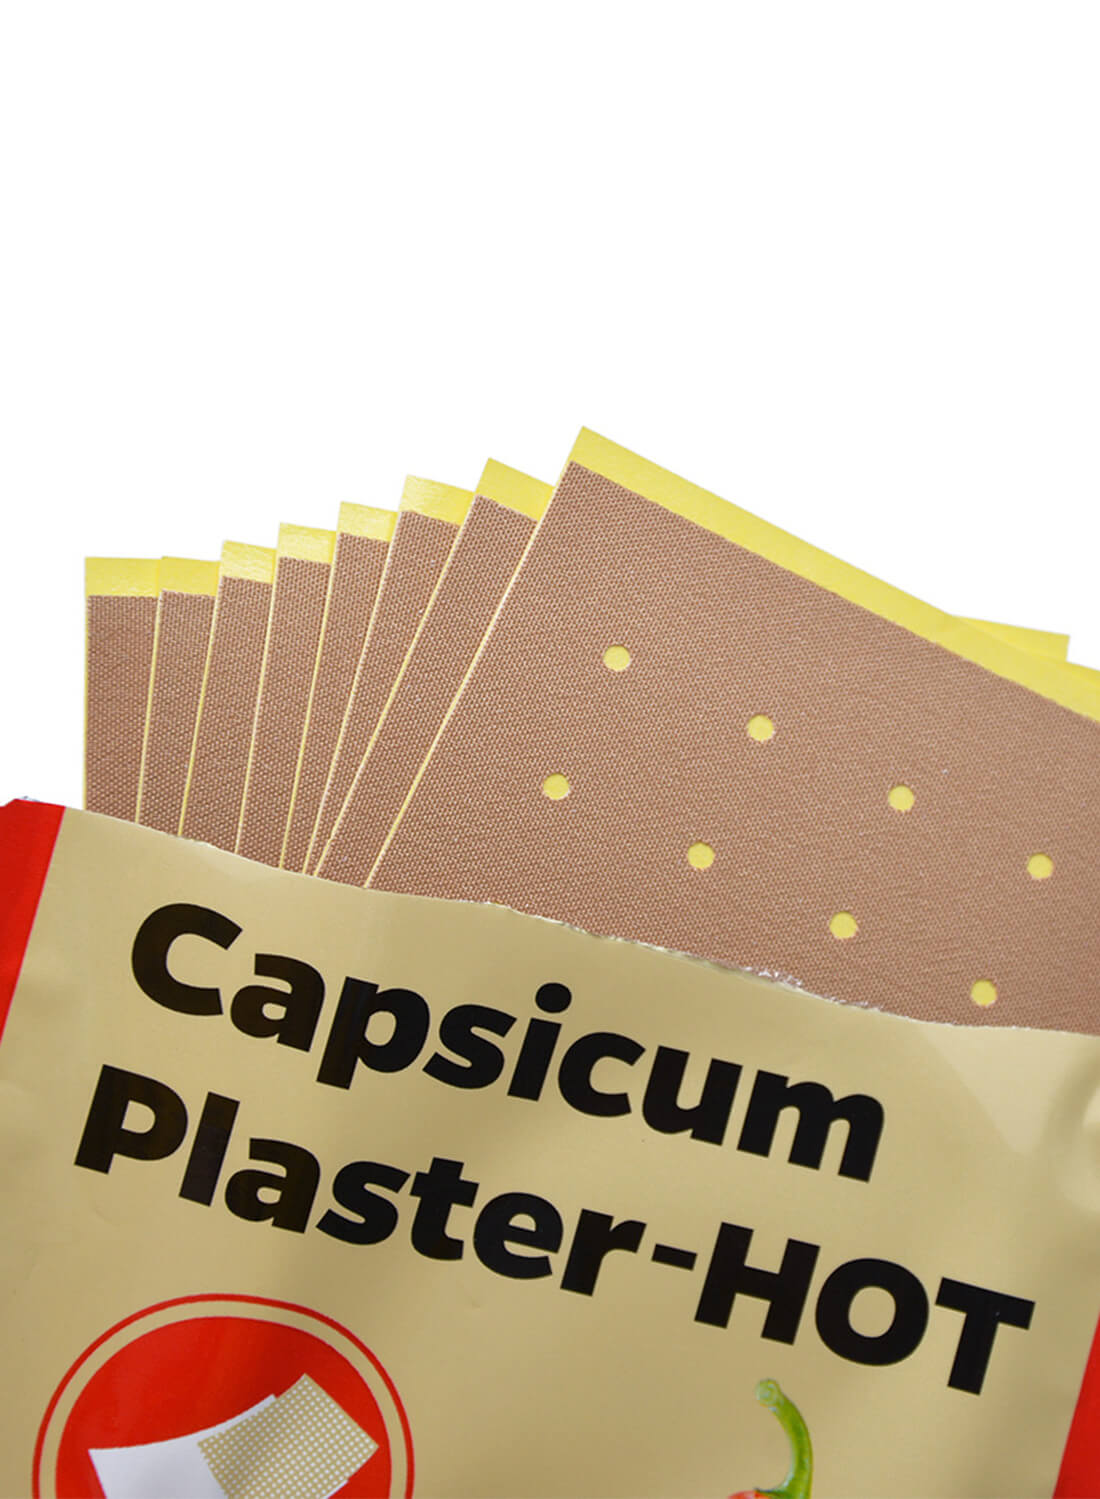 Sumifun Hot Capsicum Plaster Thermal Patch 8Pcs